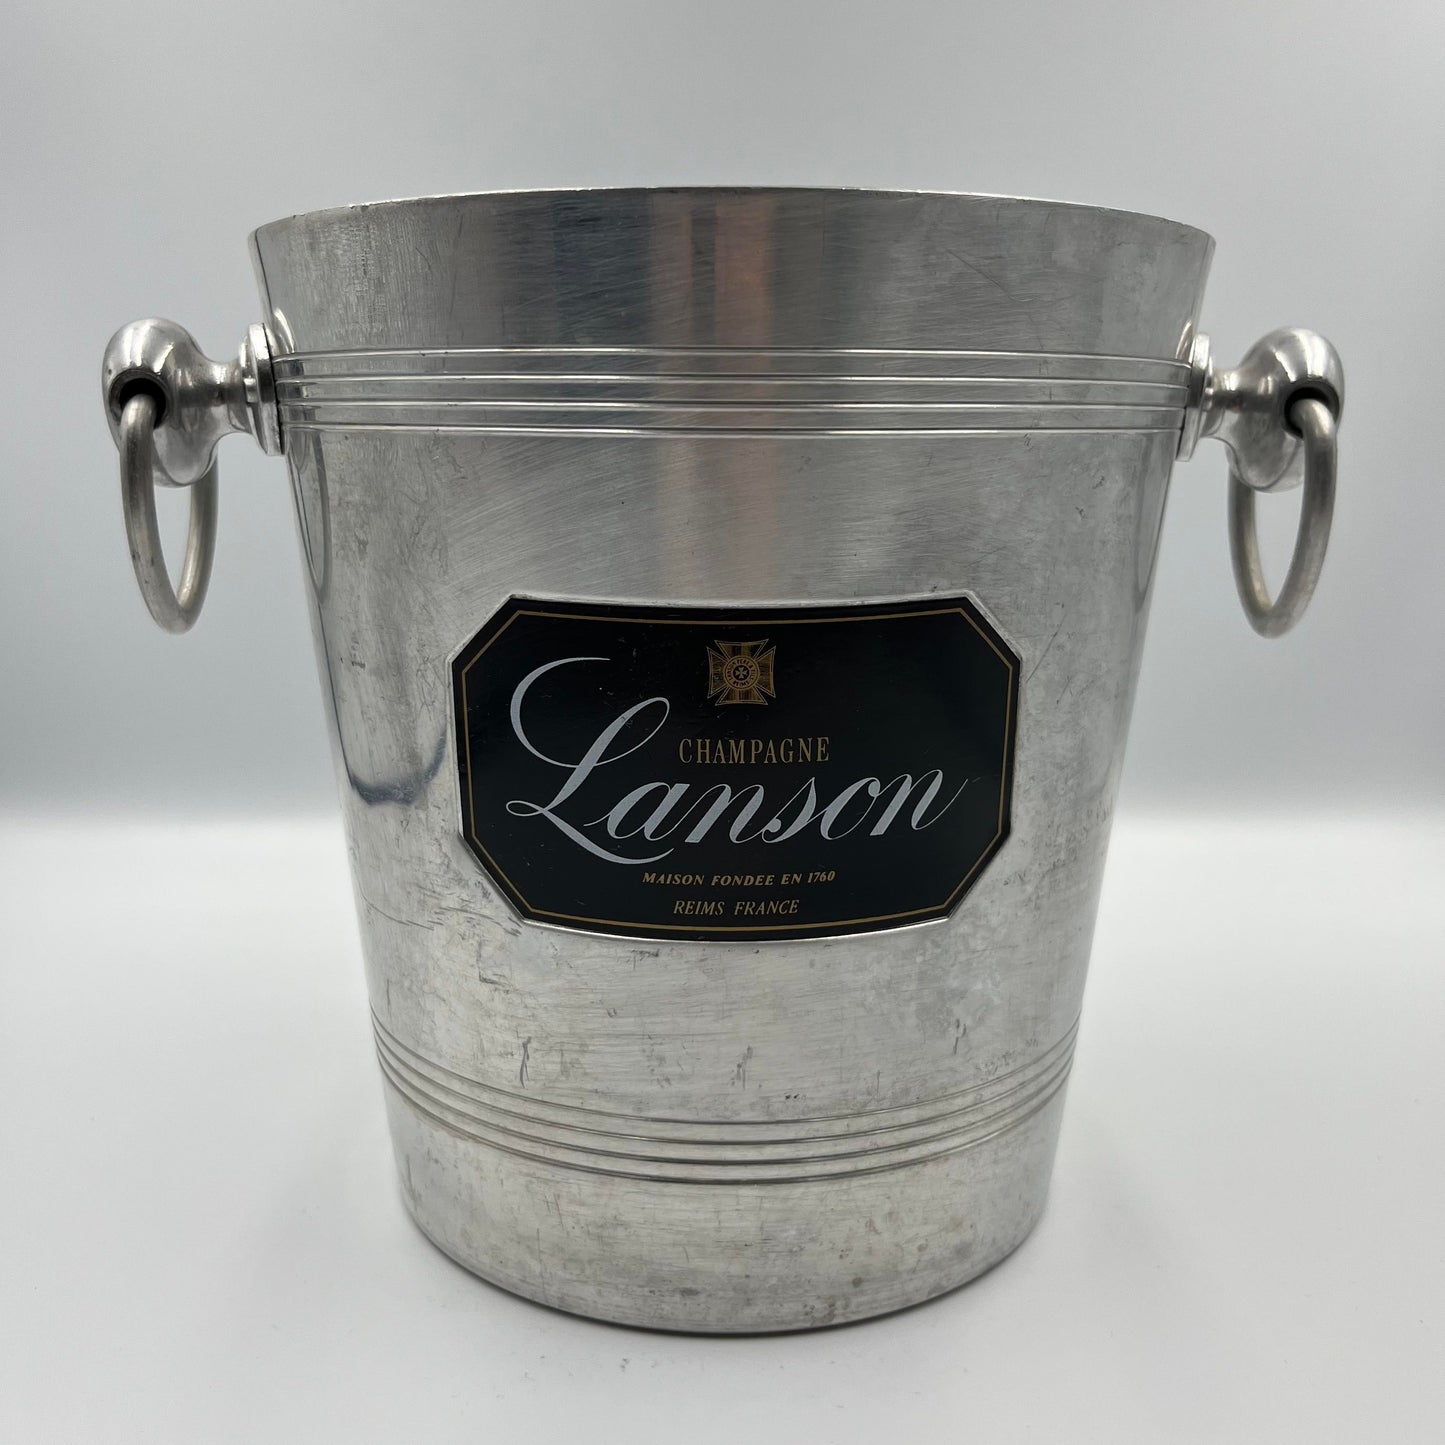 Seau à Champagne Lanson Vintage